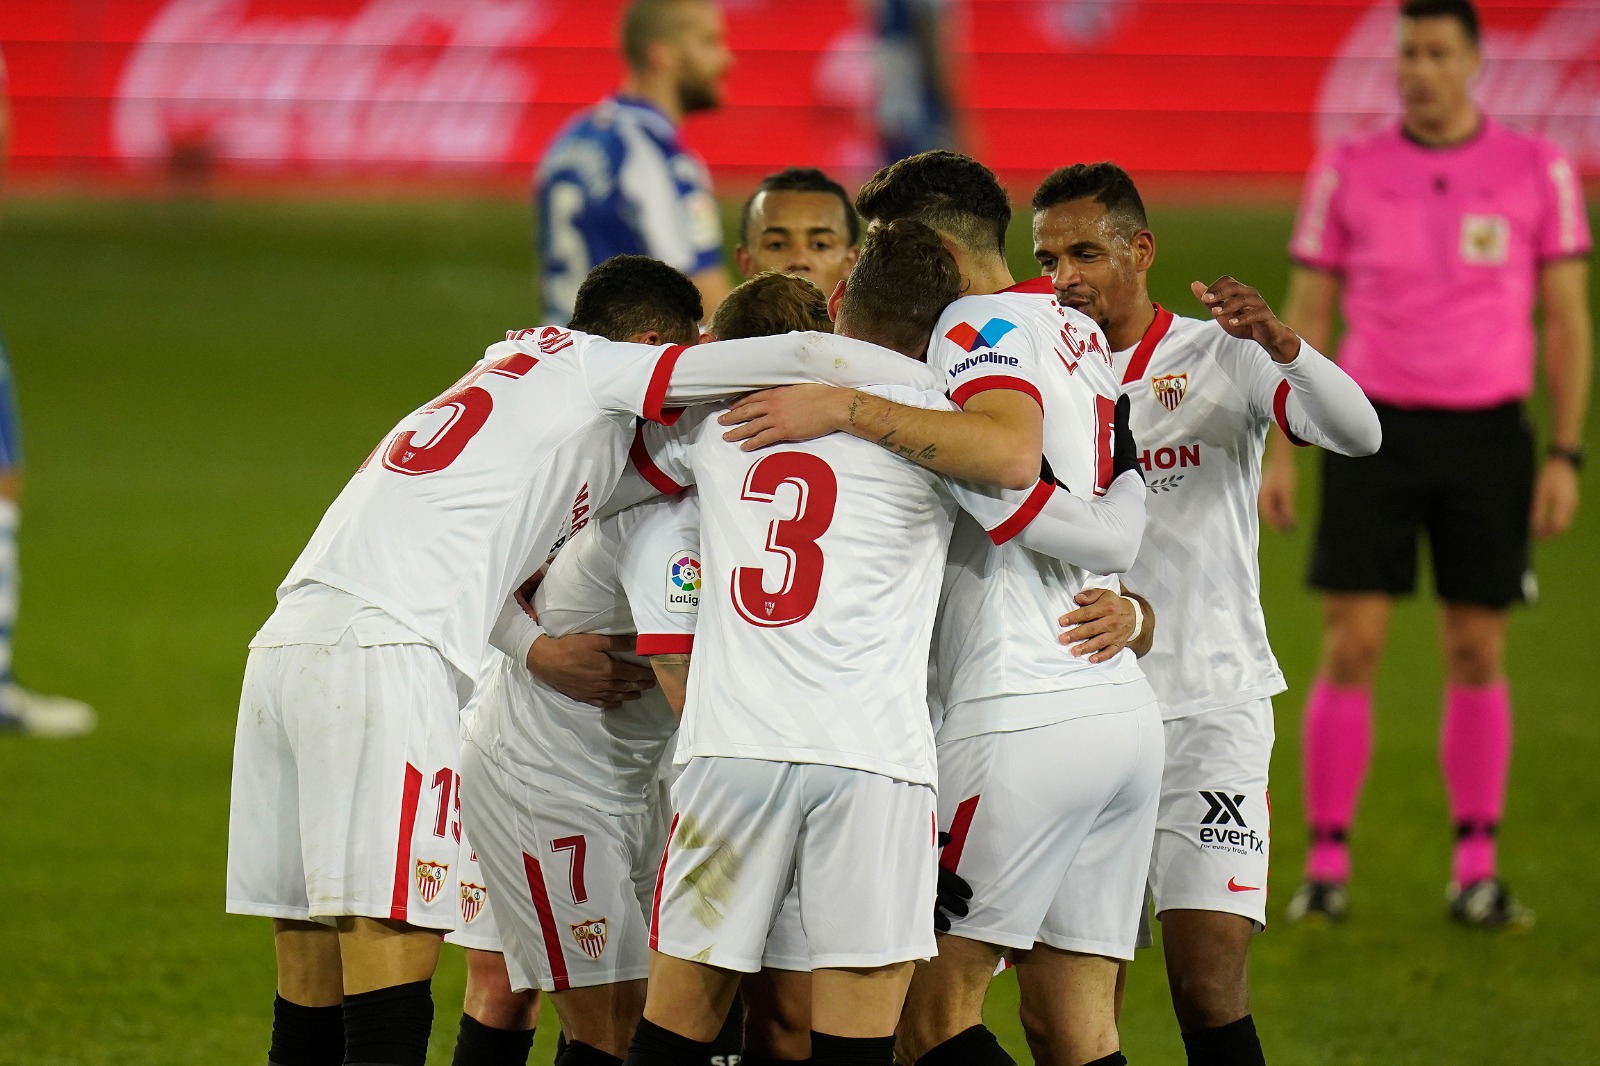 Sevilla FC celebrate a goal against Deportivo Alavés